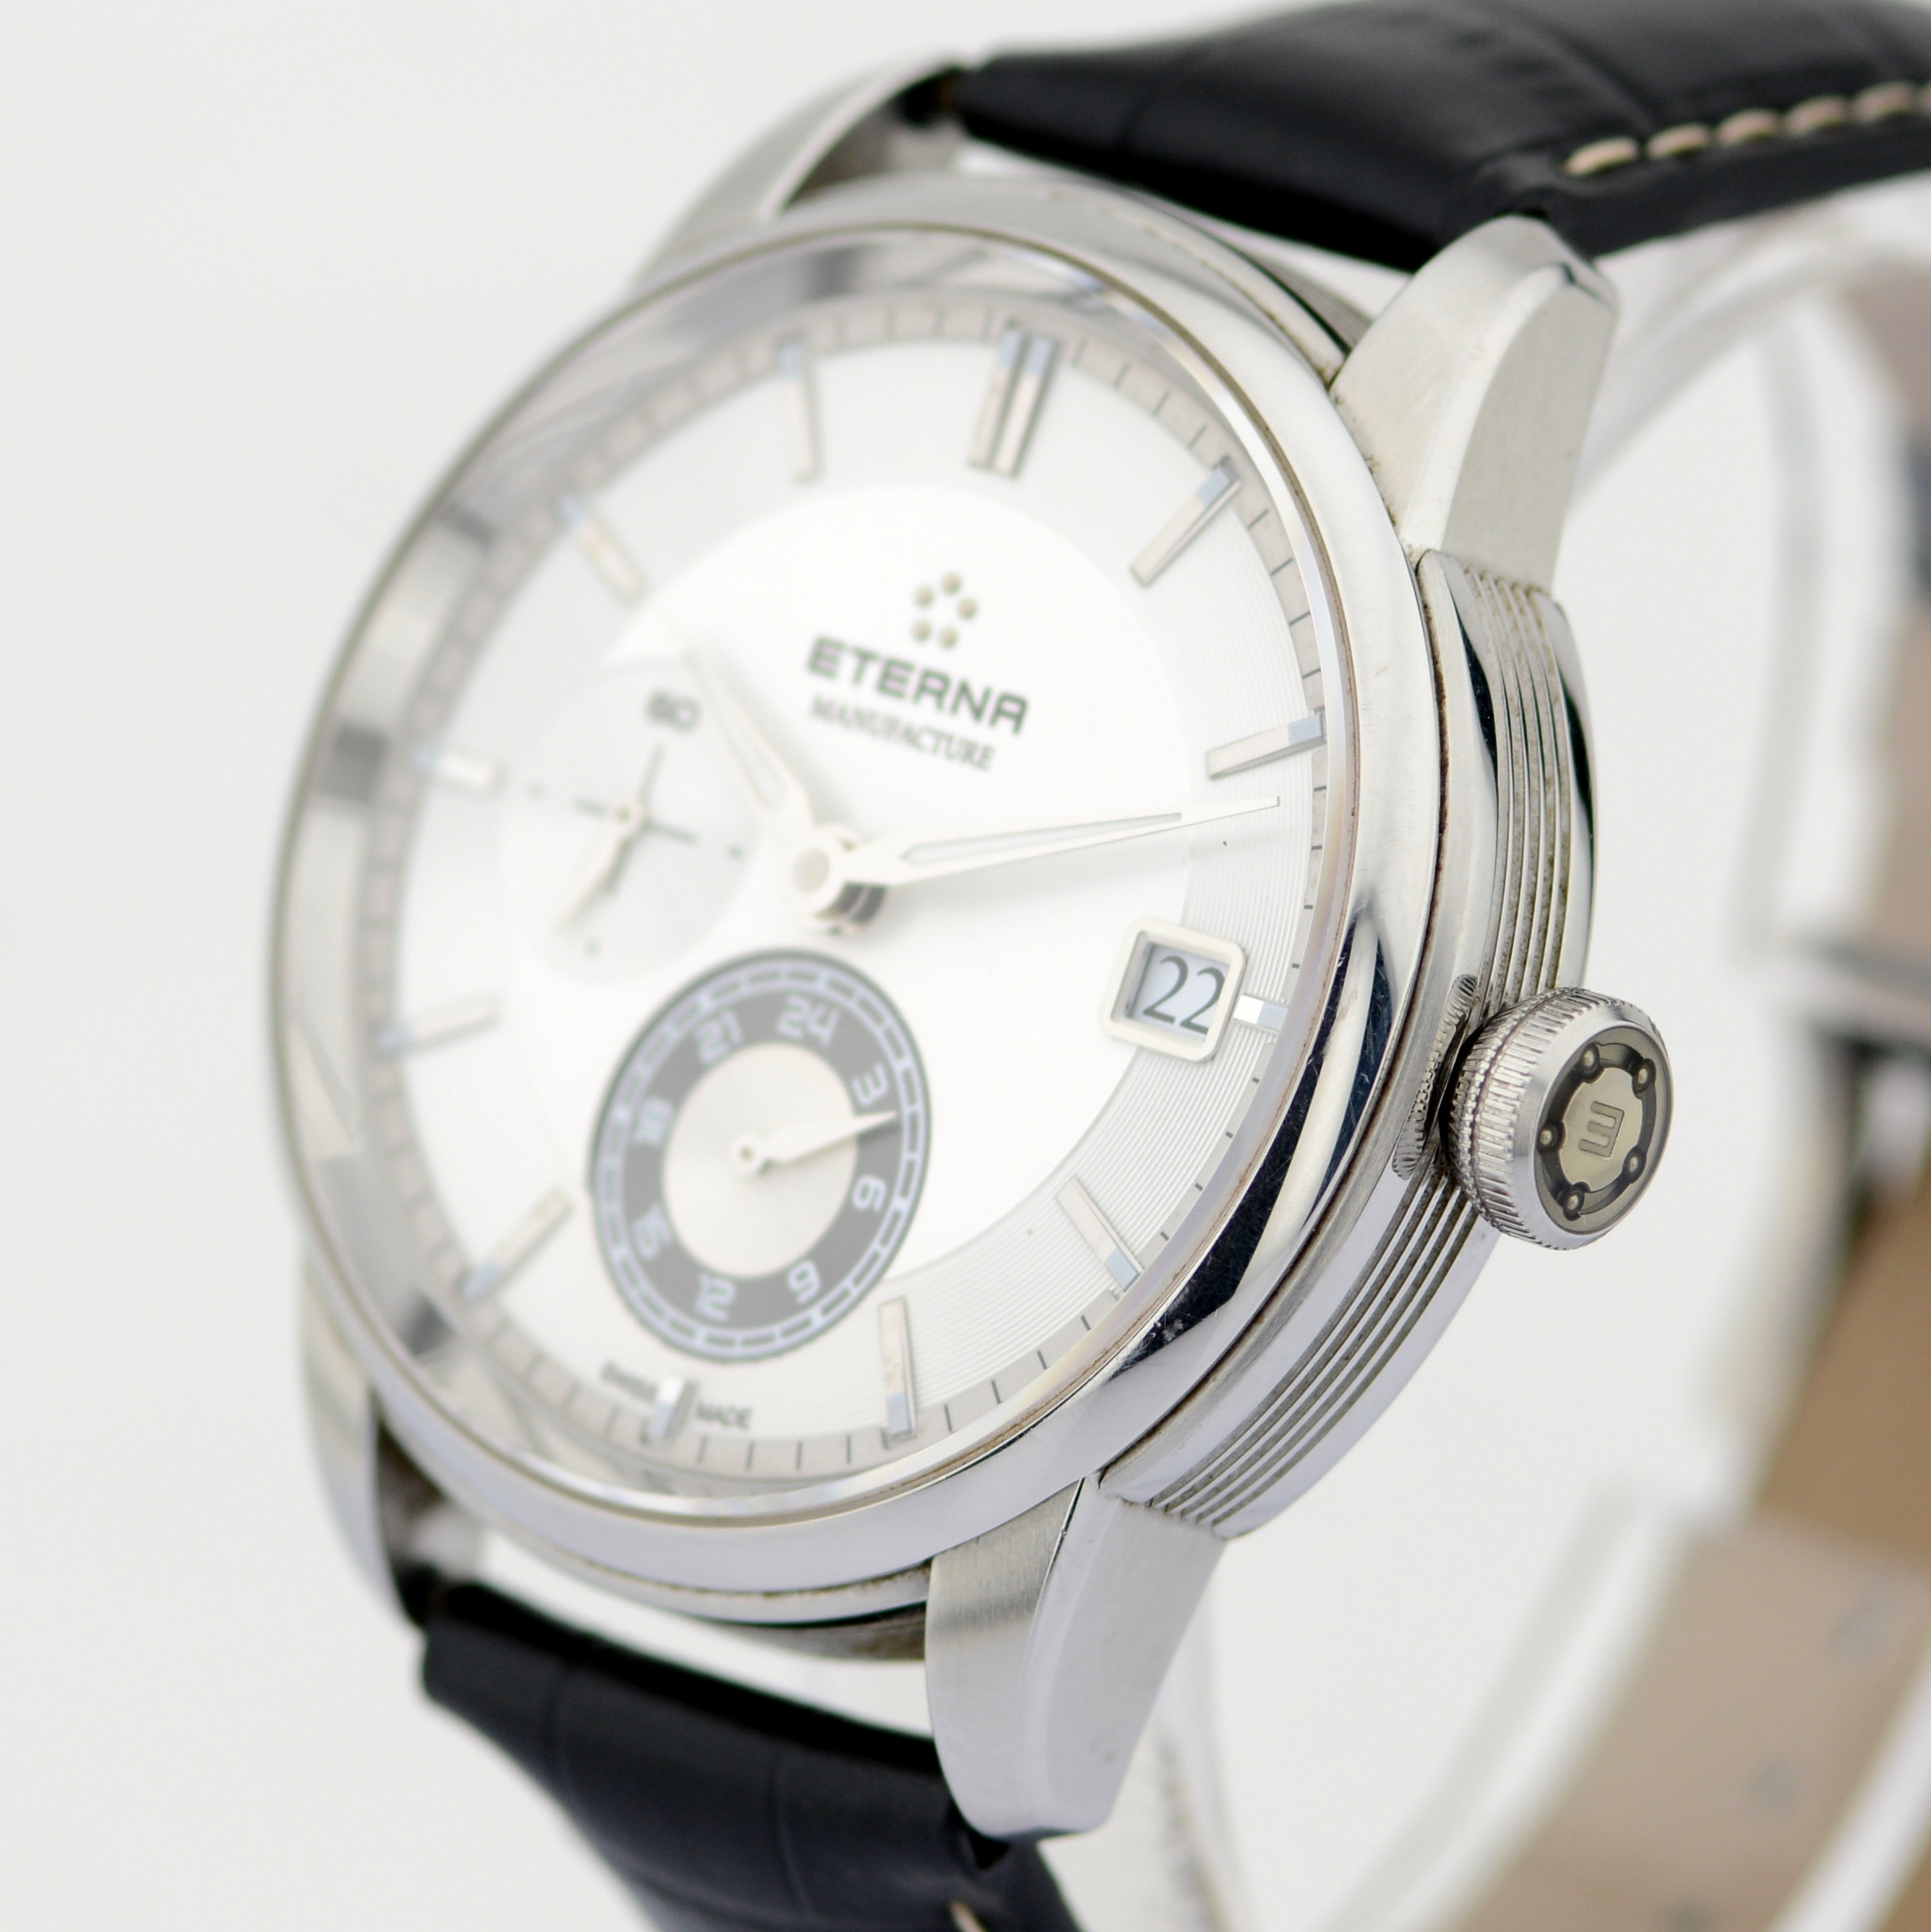 Eterna / Adventic GMT Manufacture Automatic Date - Gentlmen's Steel Wrist Watch - Image 3 of 10